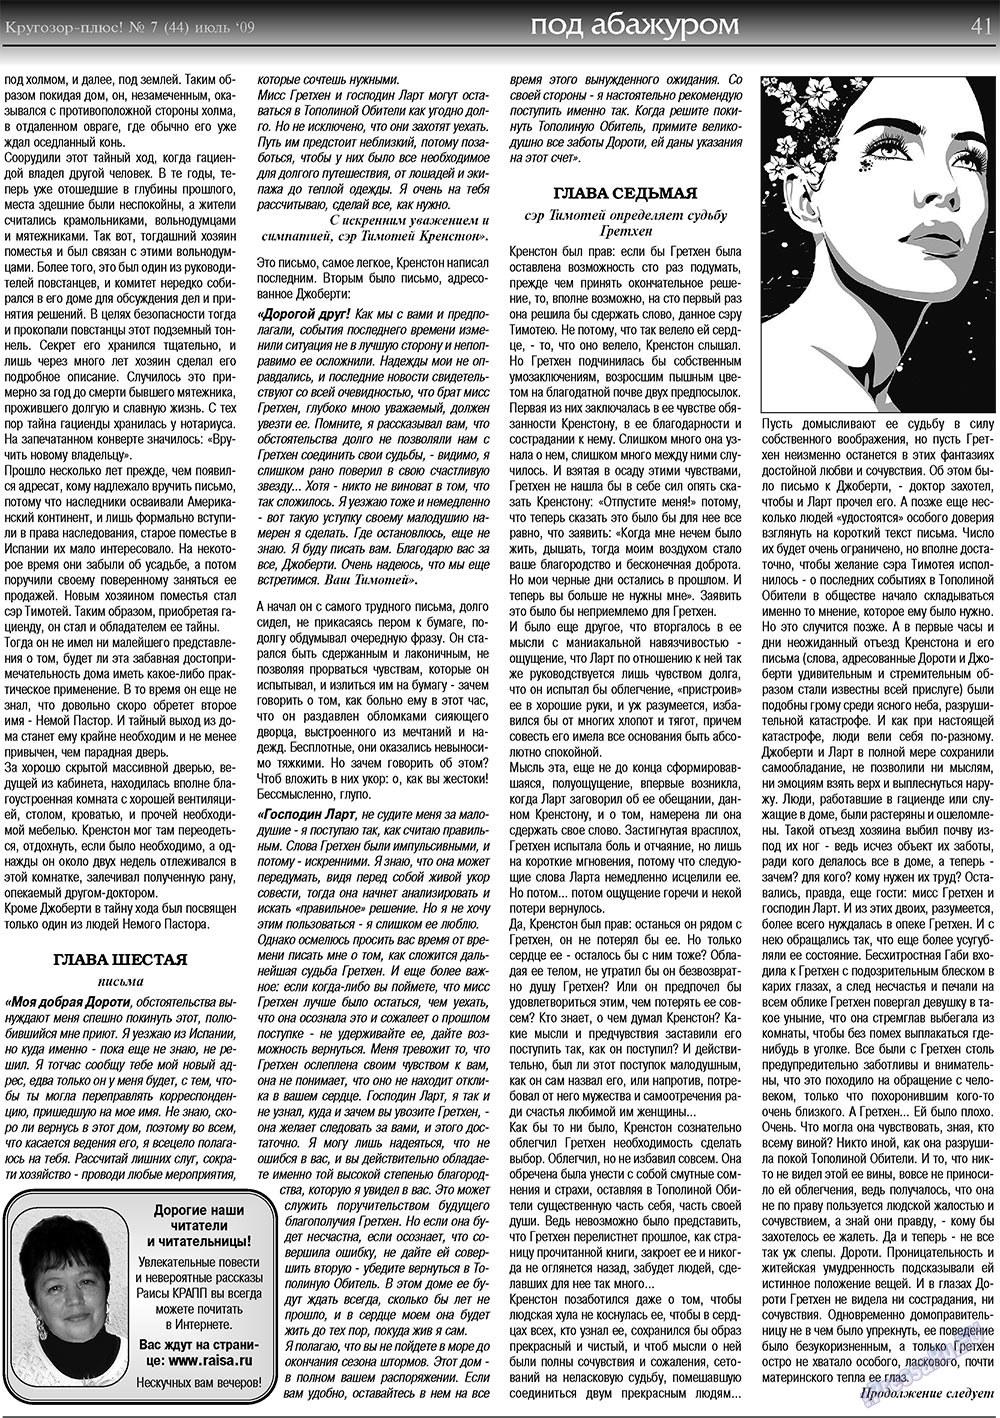 Кругозор плюс! (газета). 2009 год, номер 7, стр. 41